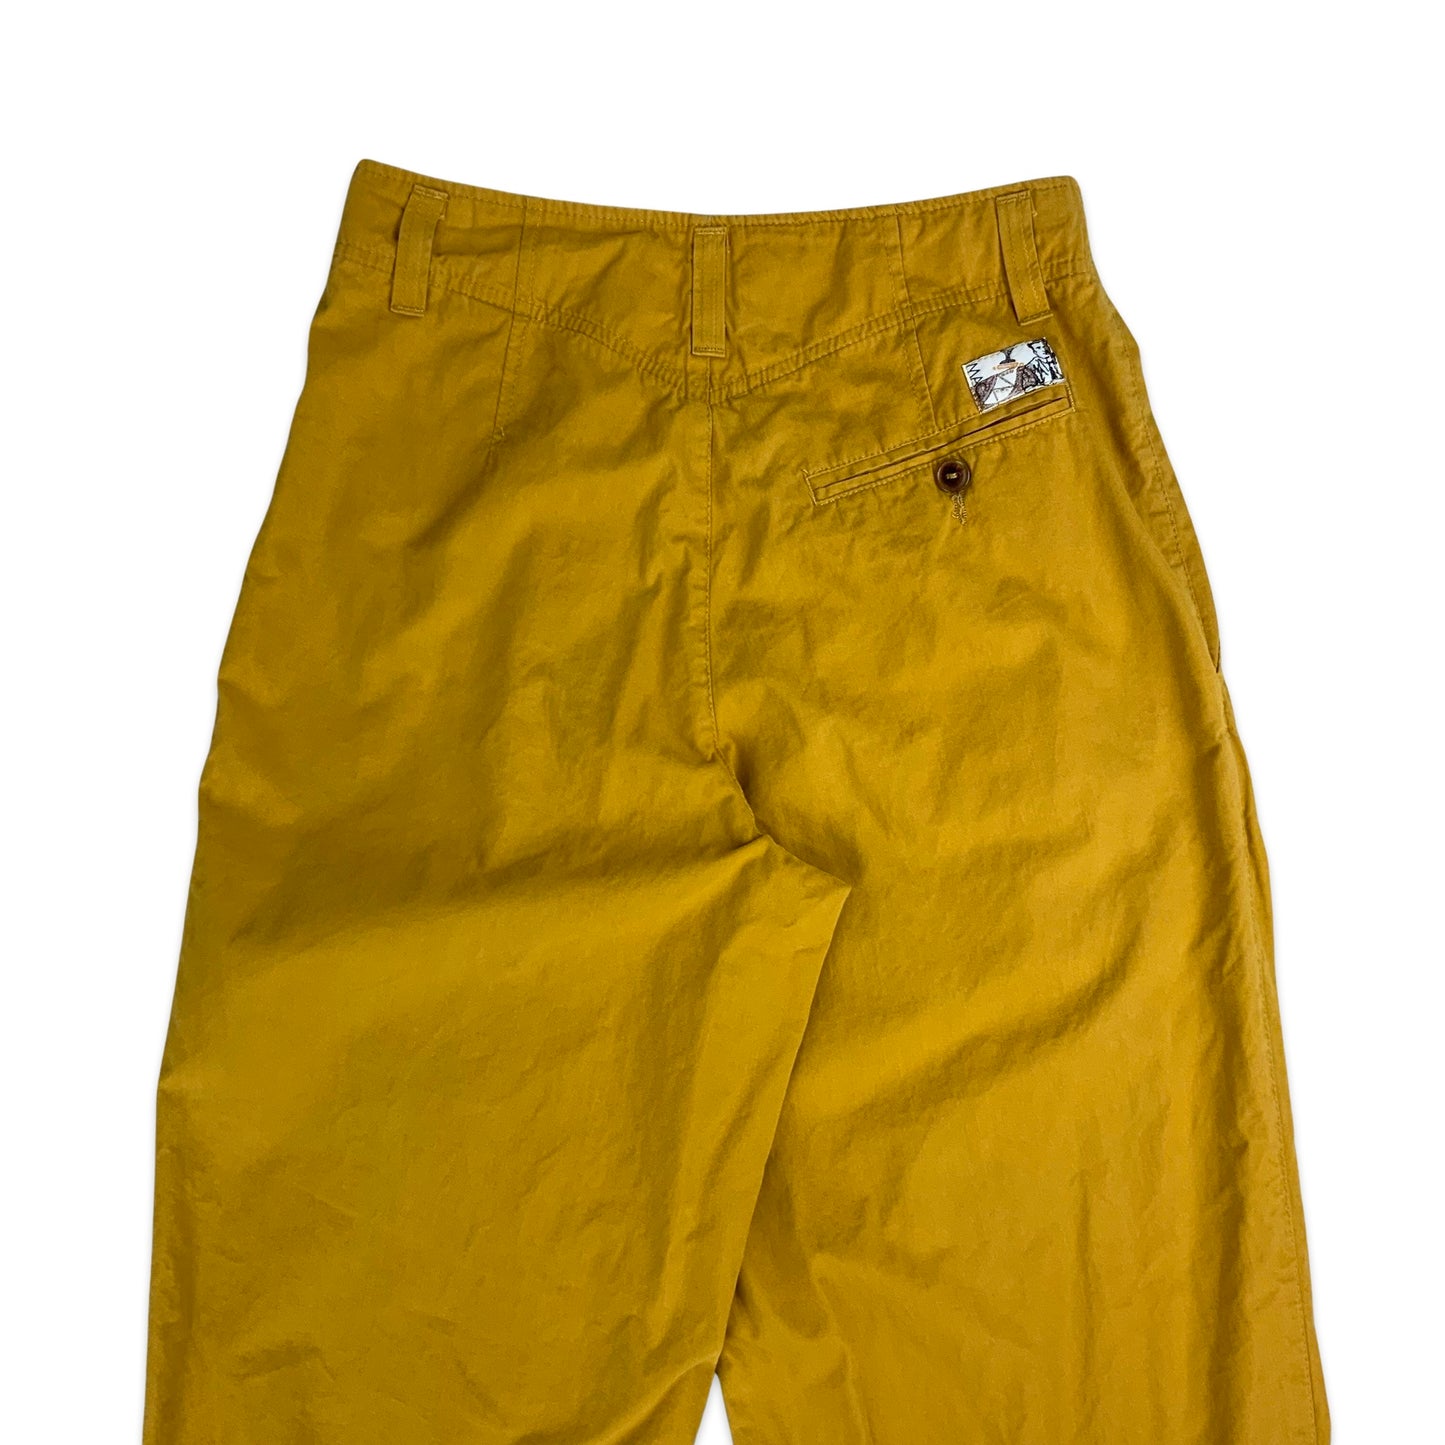 Vintage Mustard Yellow Wide Leg Trousers 6 8